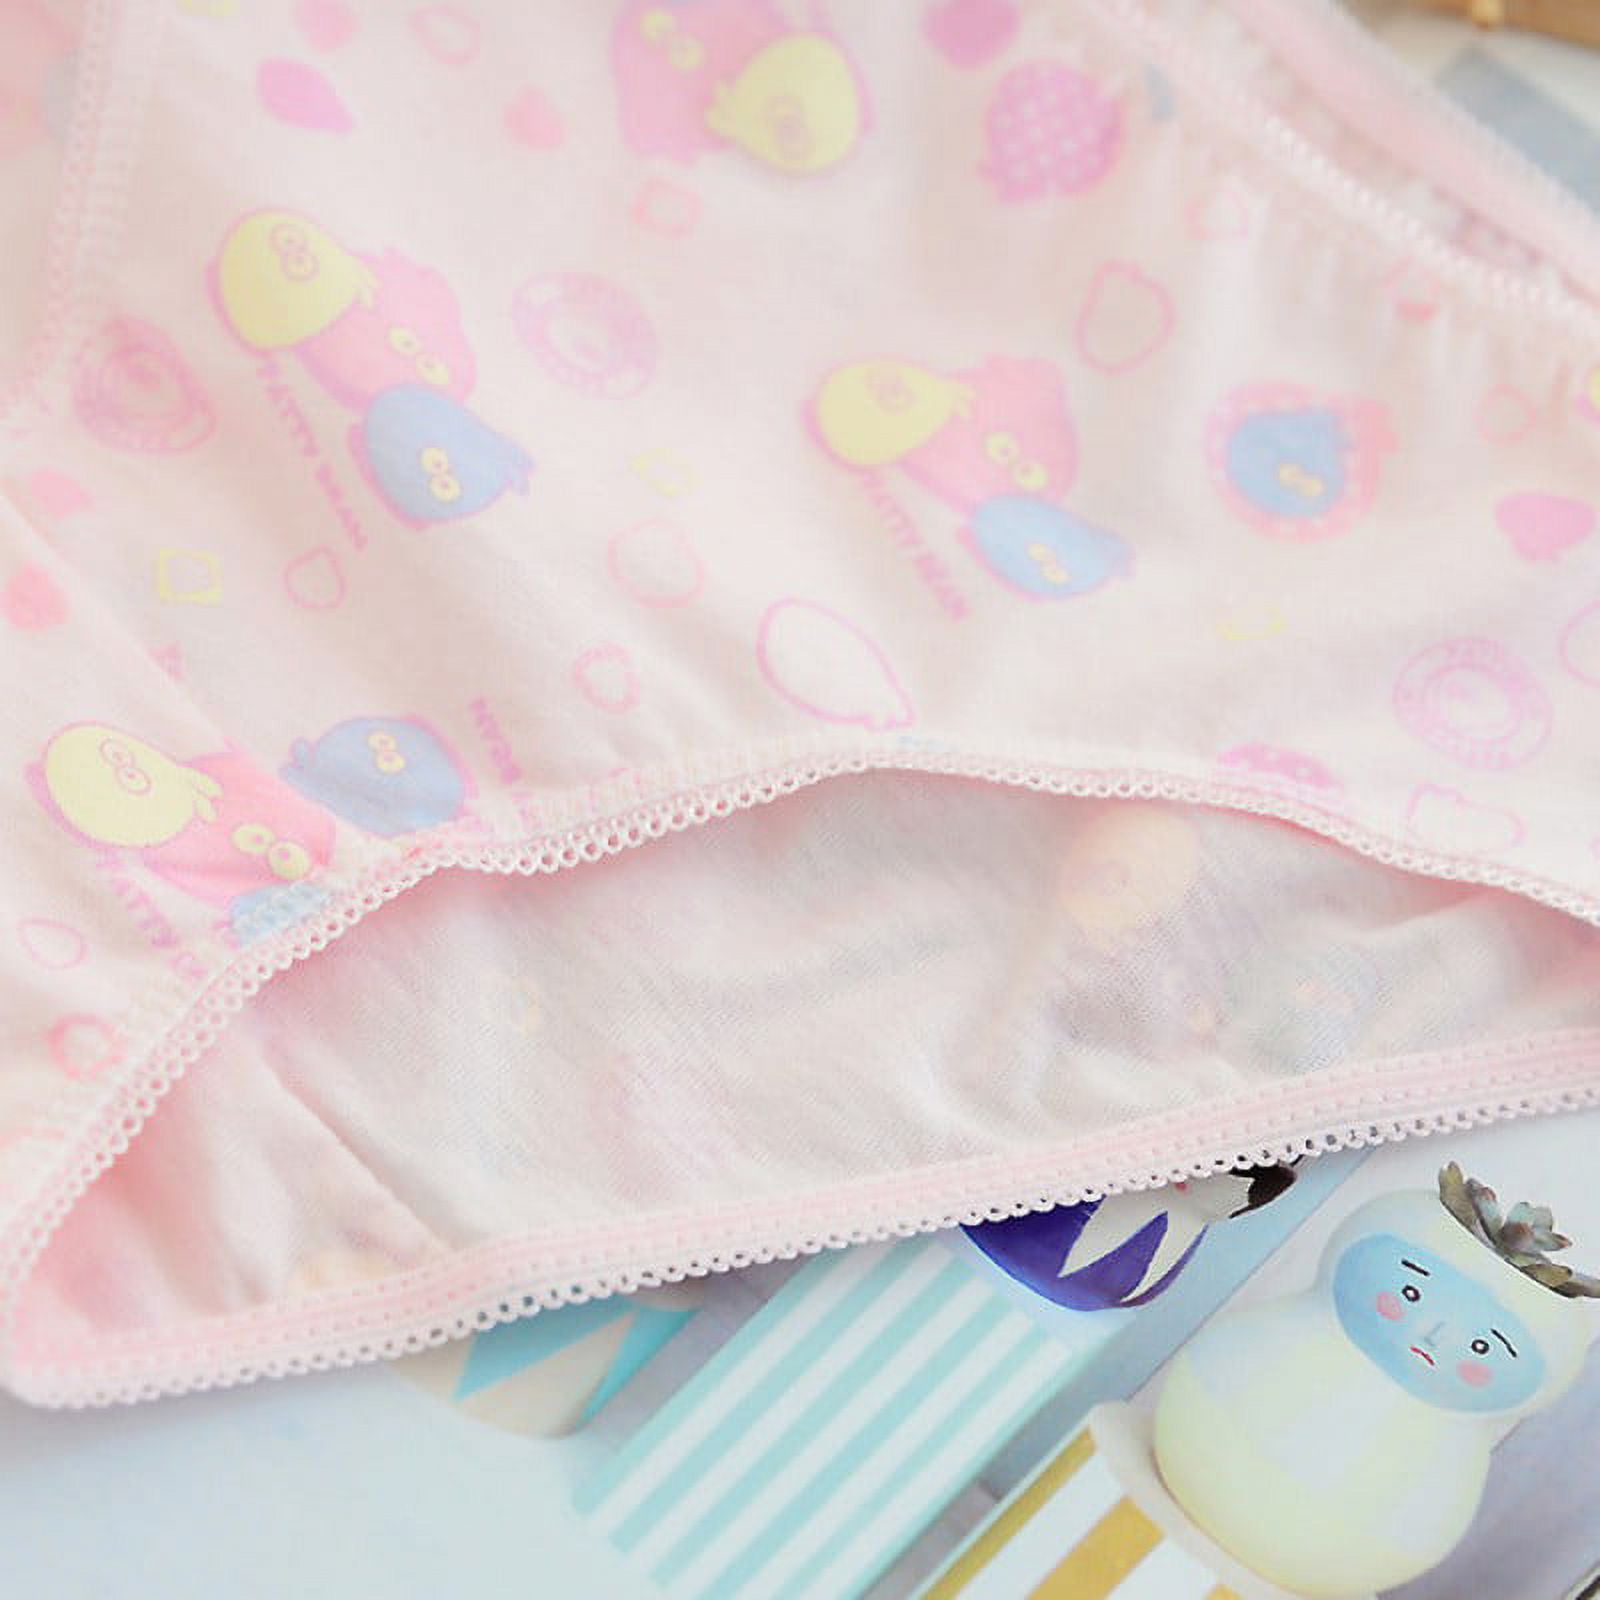 Finihen Little Girls Soft Cotton Underwear Comfort Panties Toddler